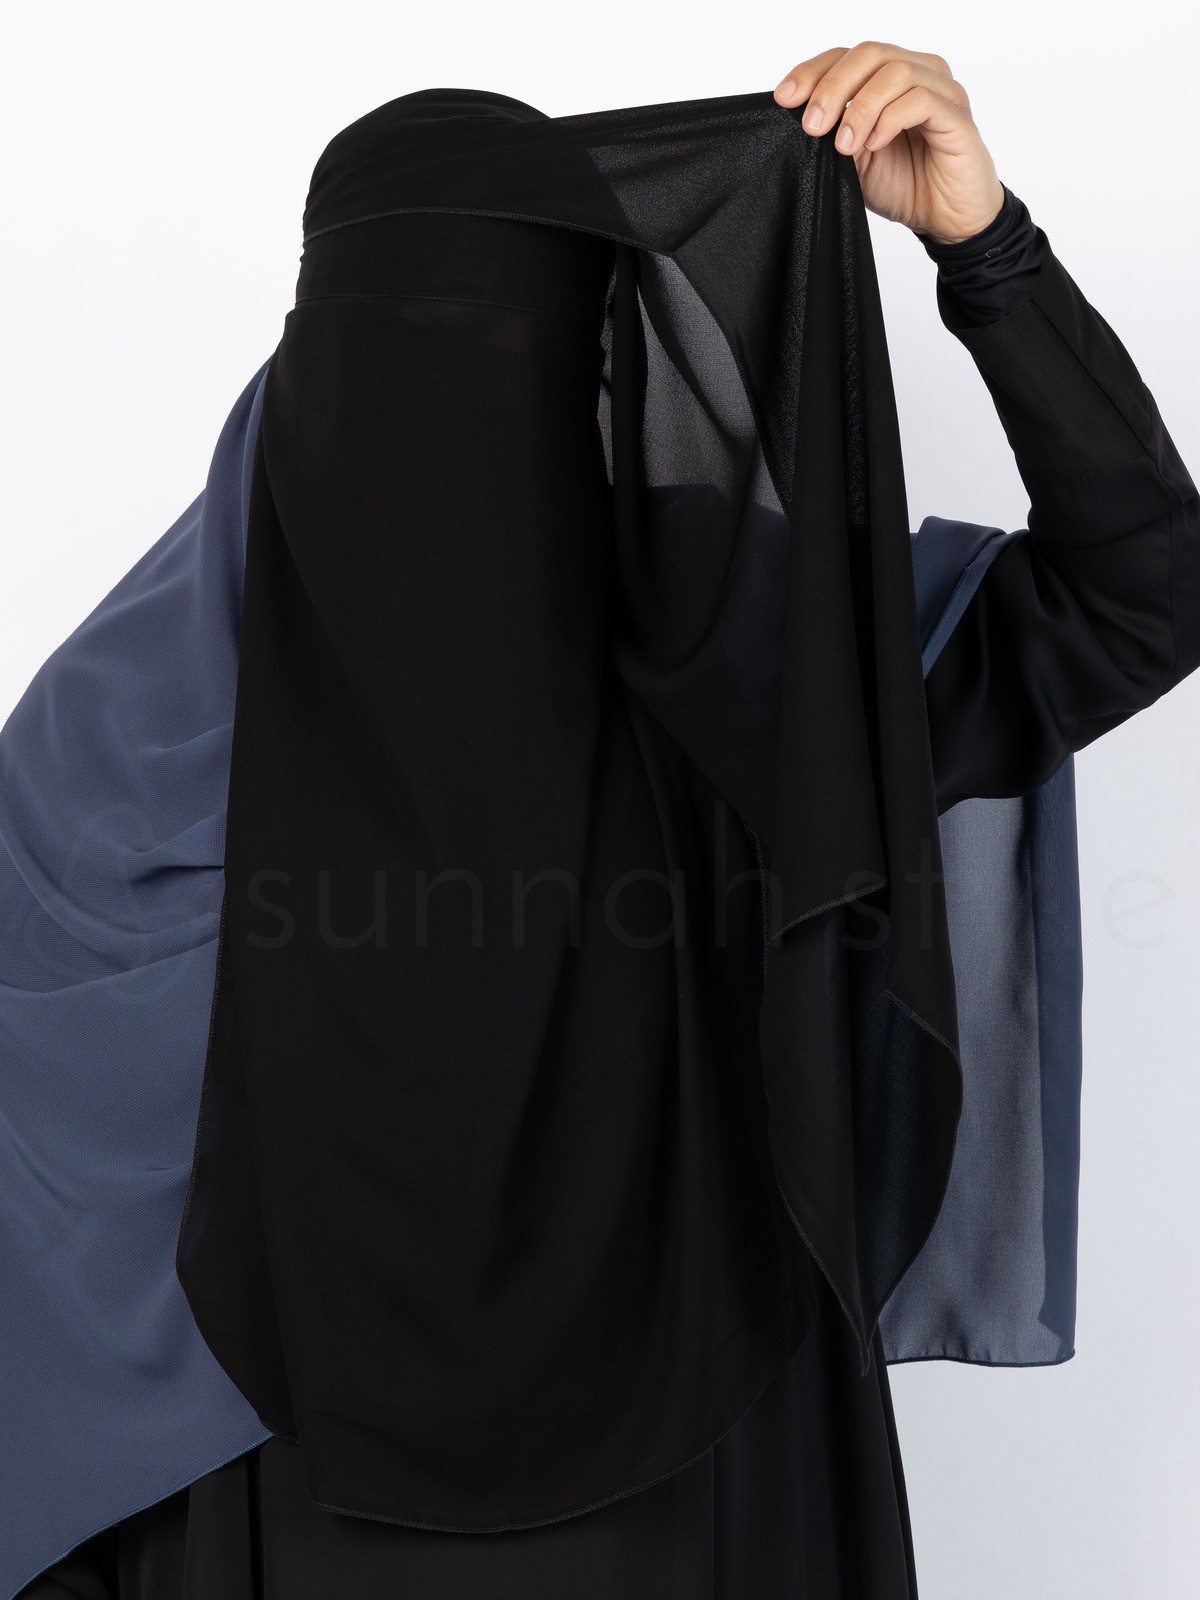 Sunnah Style - Long Three Layer Niqab (Black)